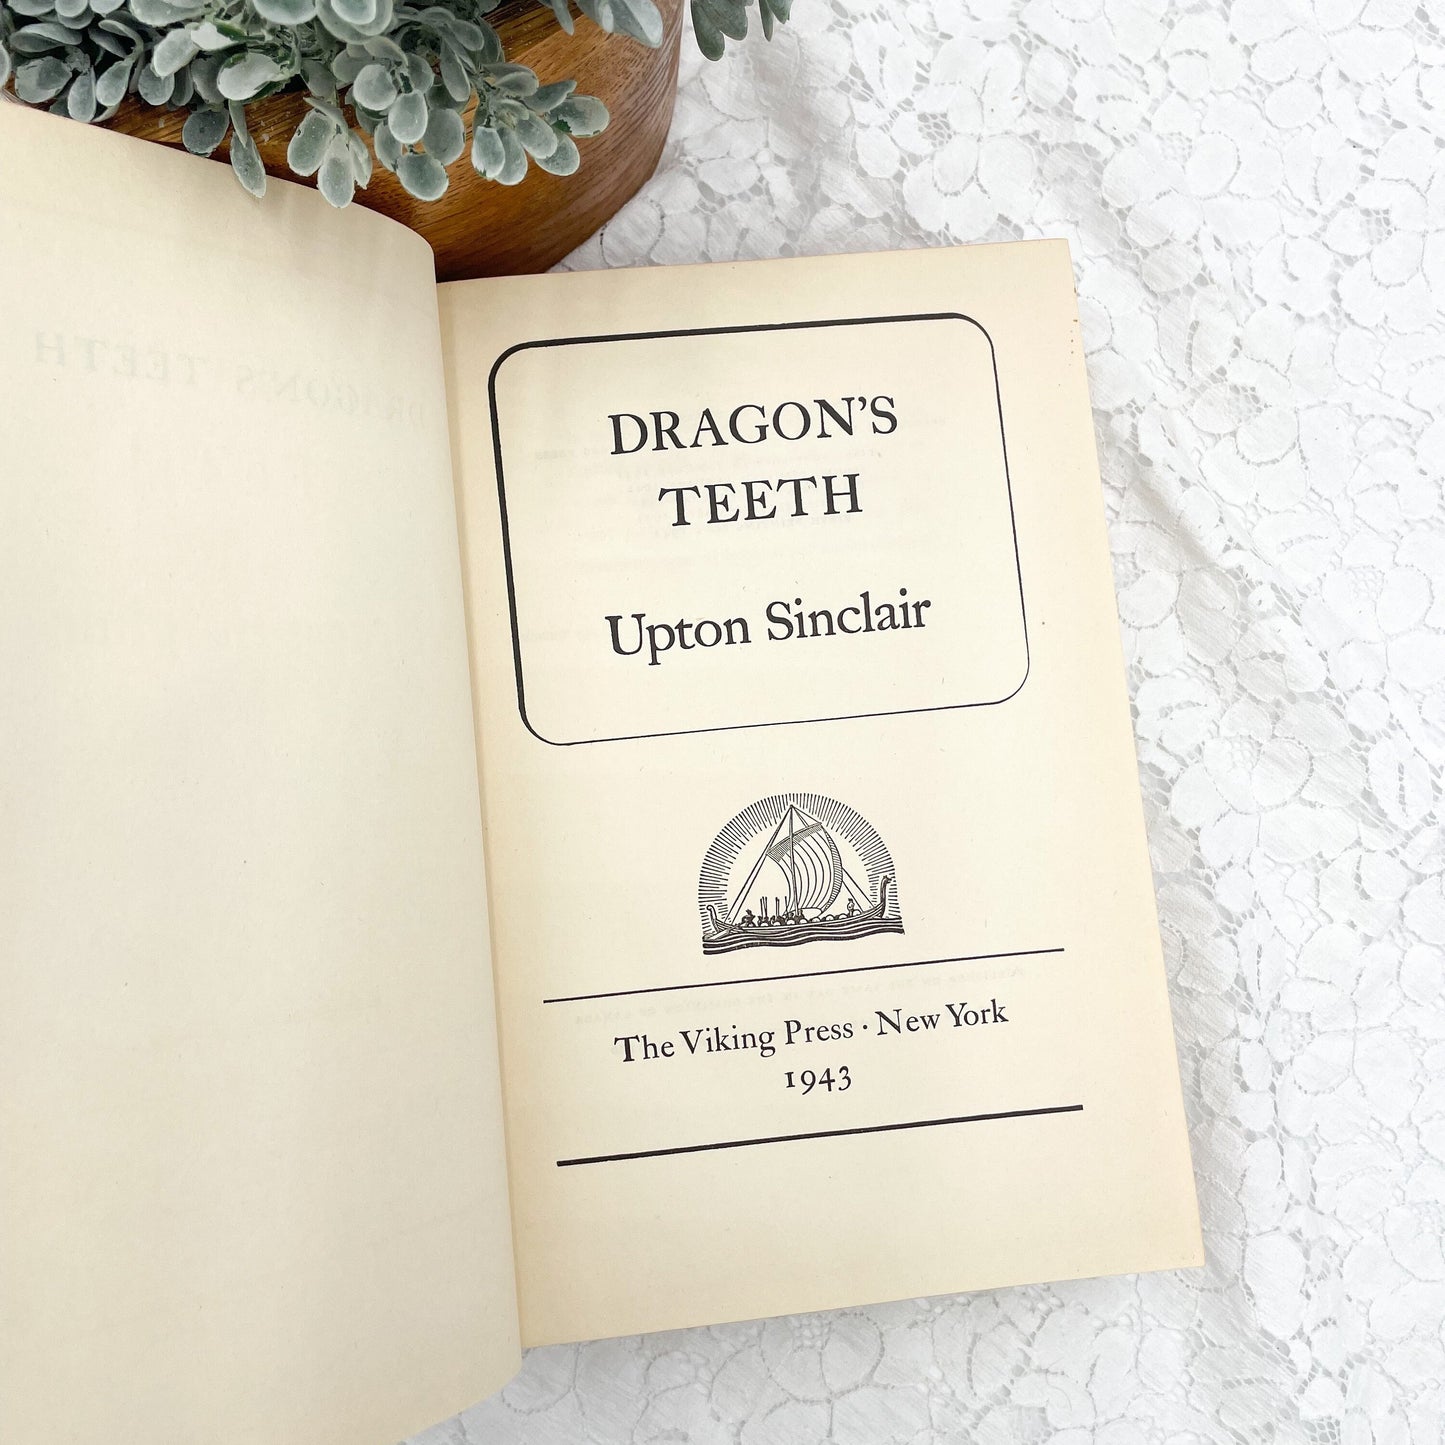 Dragon's Teeth by Upton Sinclair